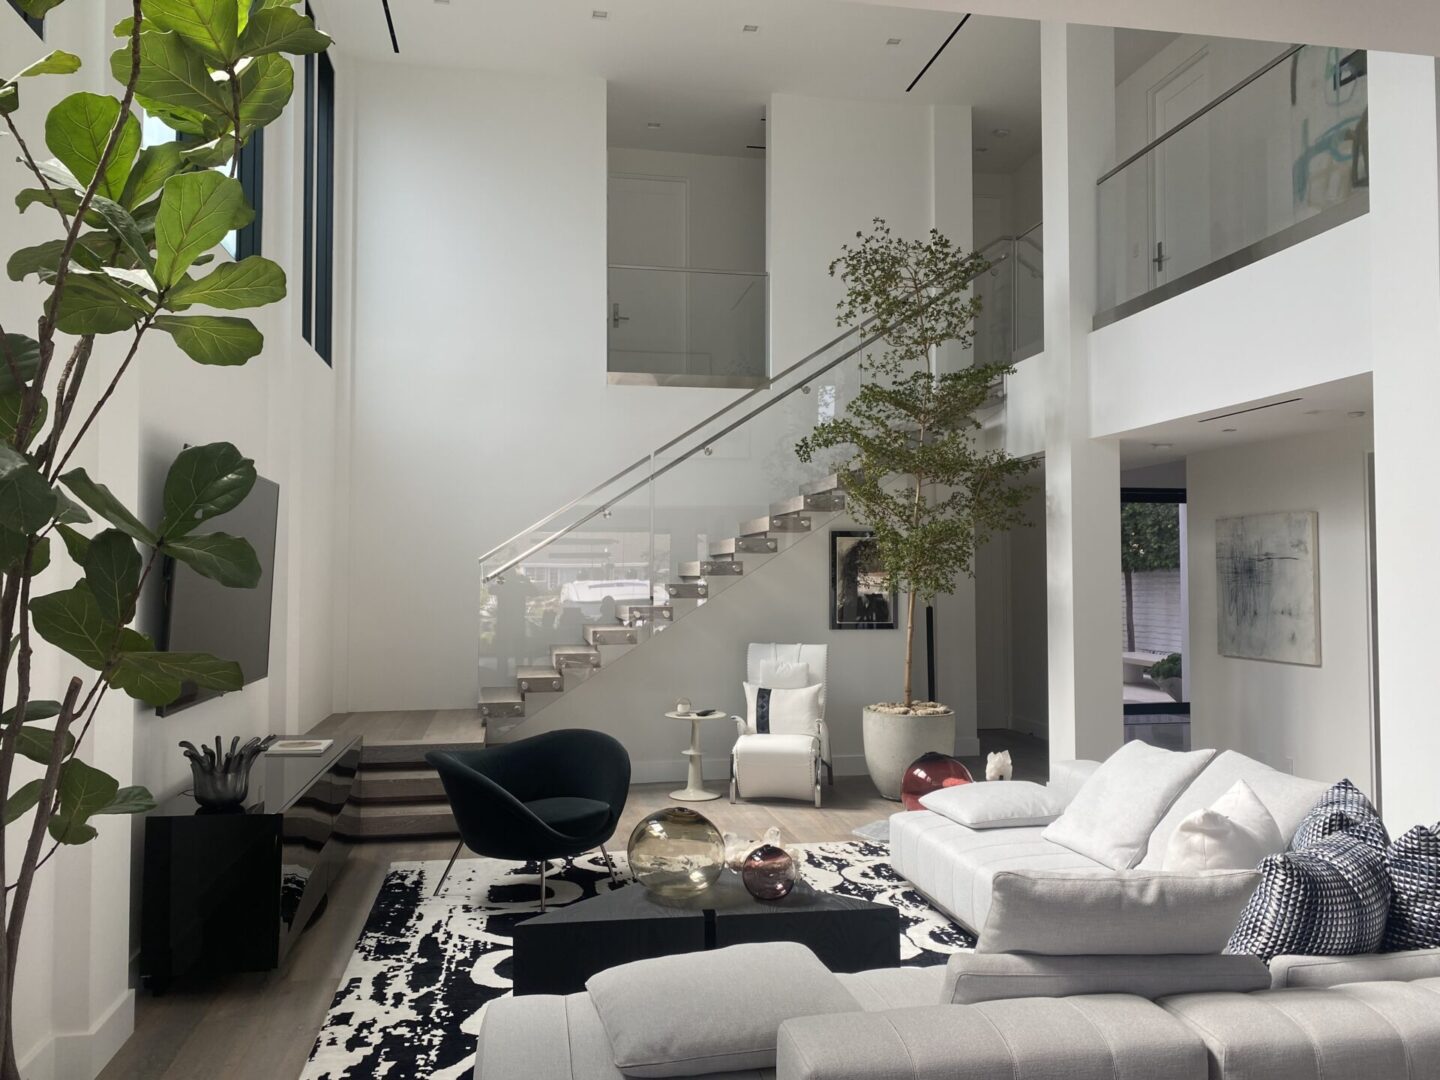 A minimalist home